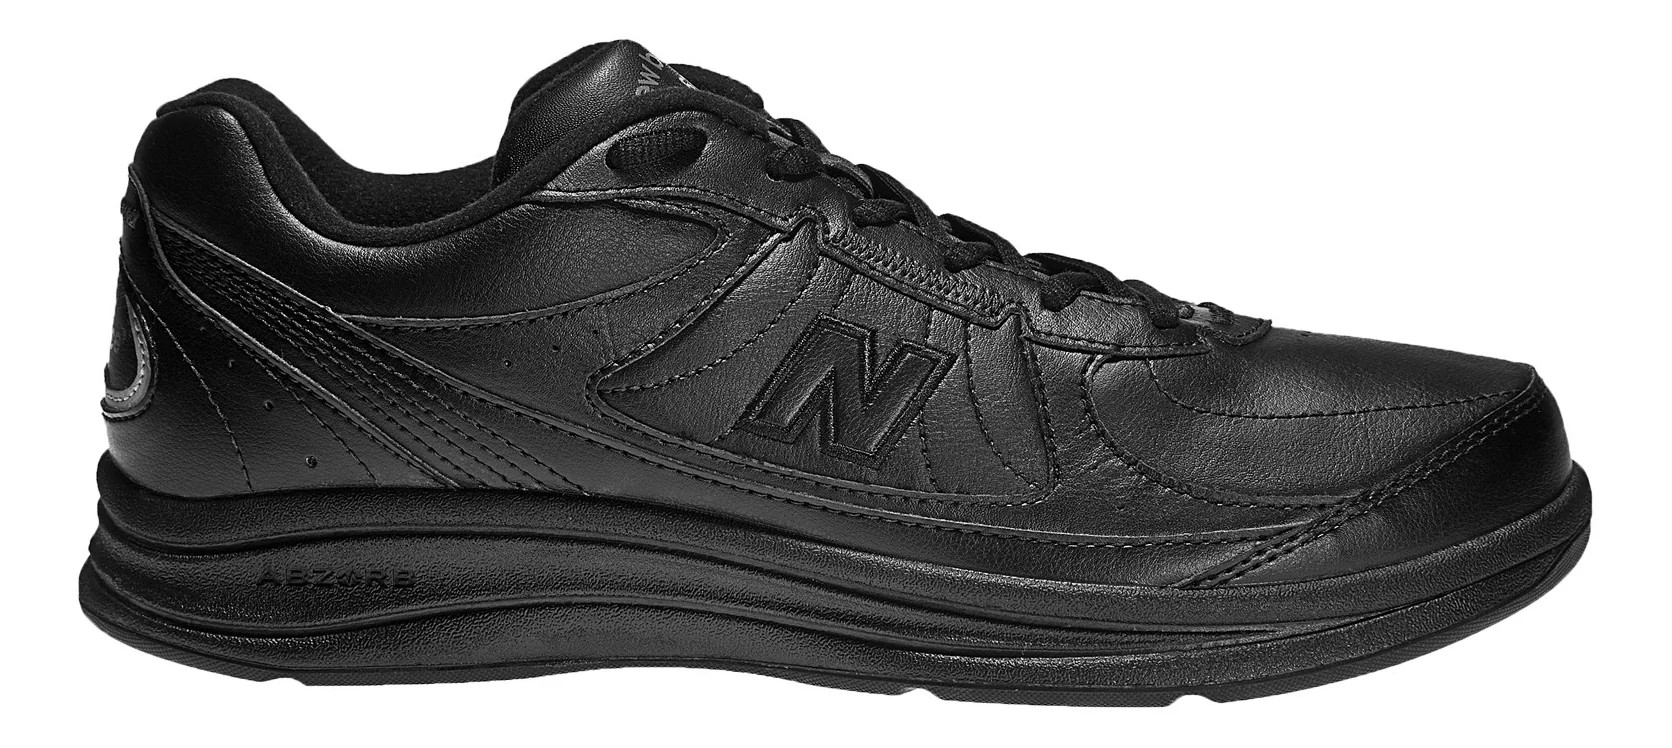 Mens New Balance 577v1 Walking Shoe